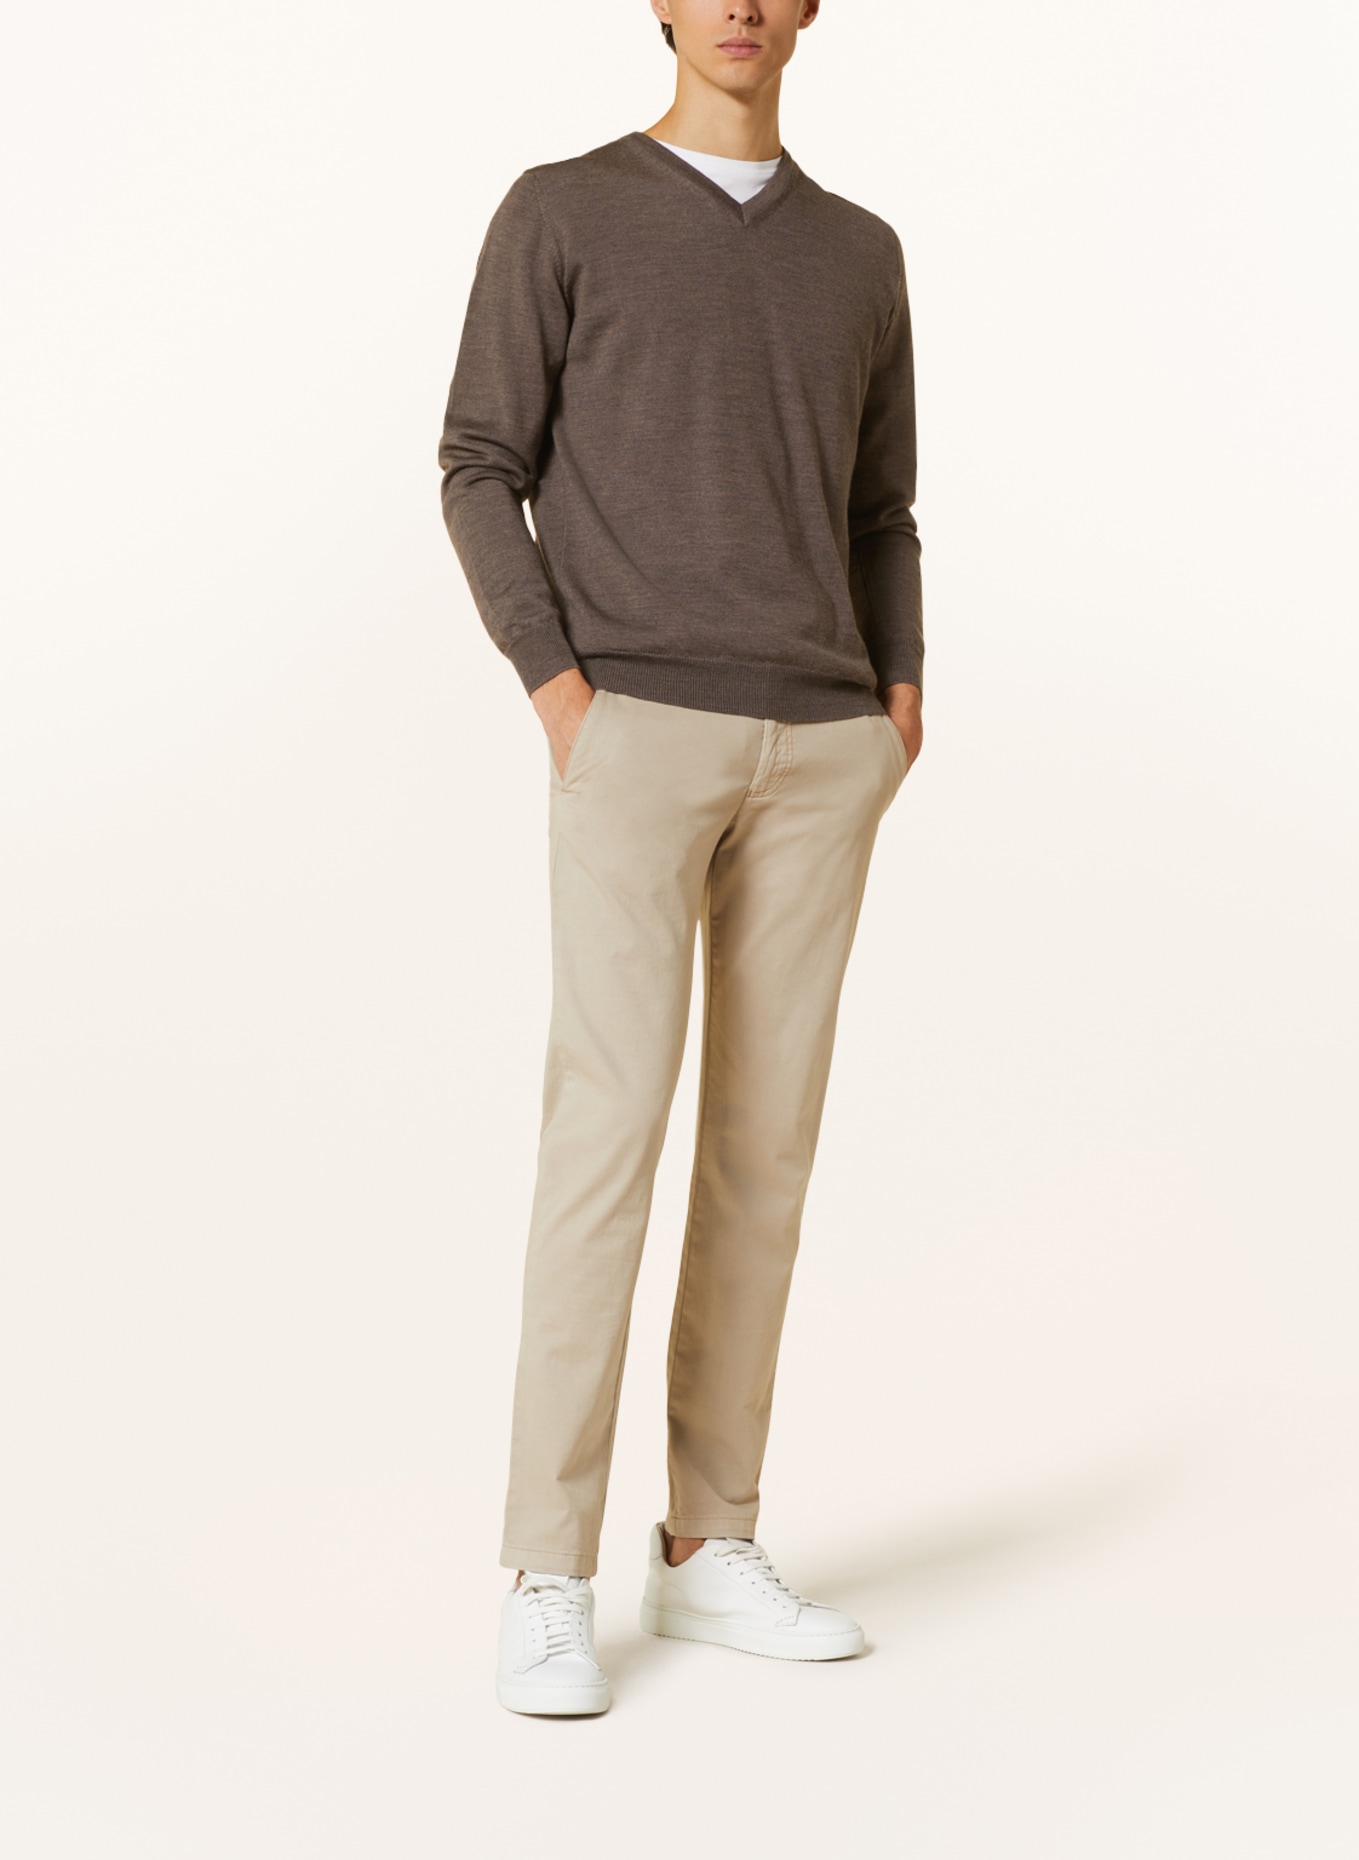 EDUARD DRESSLER Pullover, Farbe: BRAUN (Bild 2)